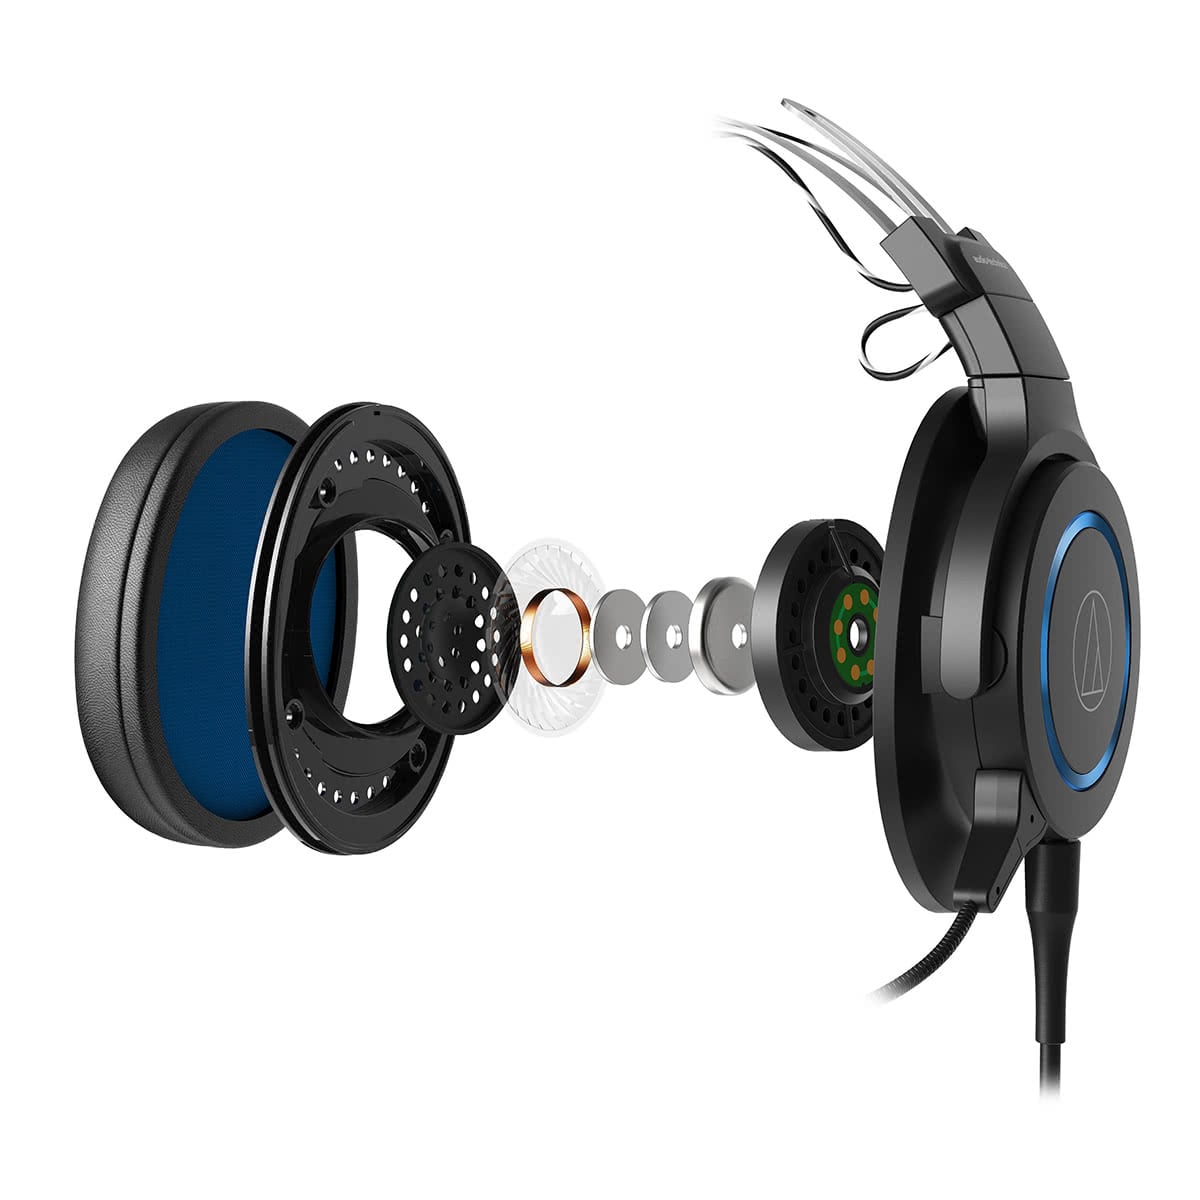 AudioTechnica ATH-G1 Premium Gaming Headset